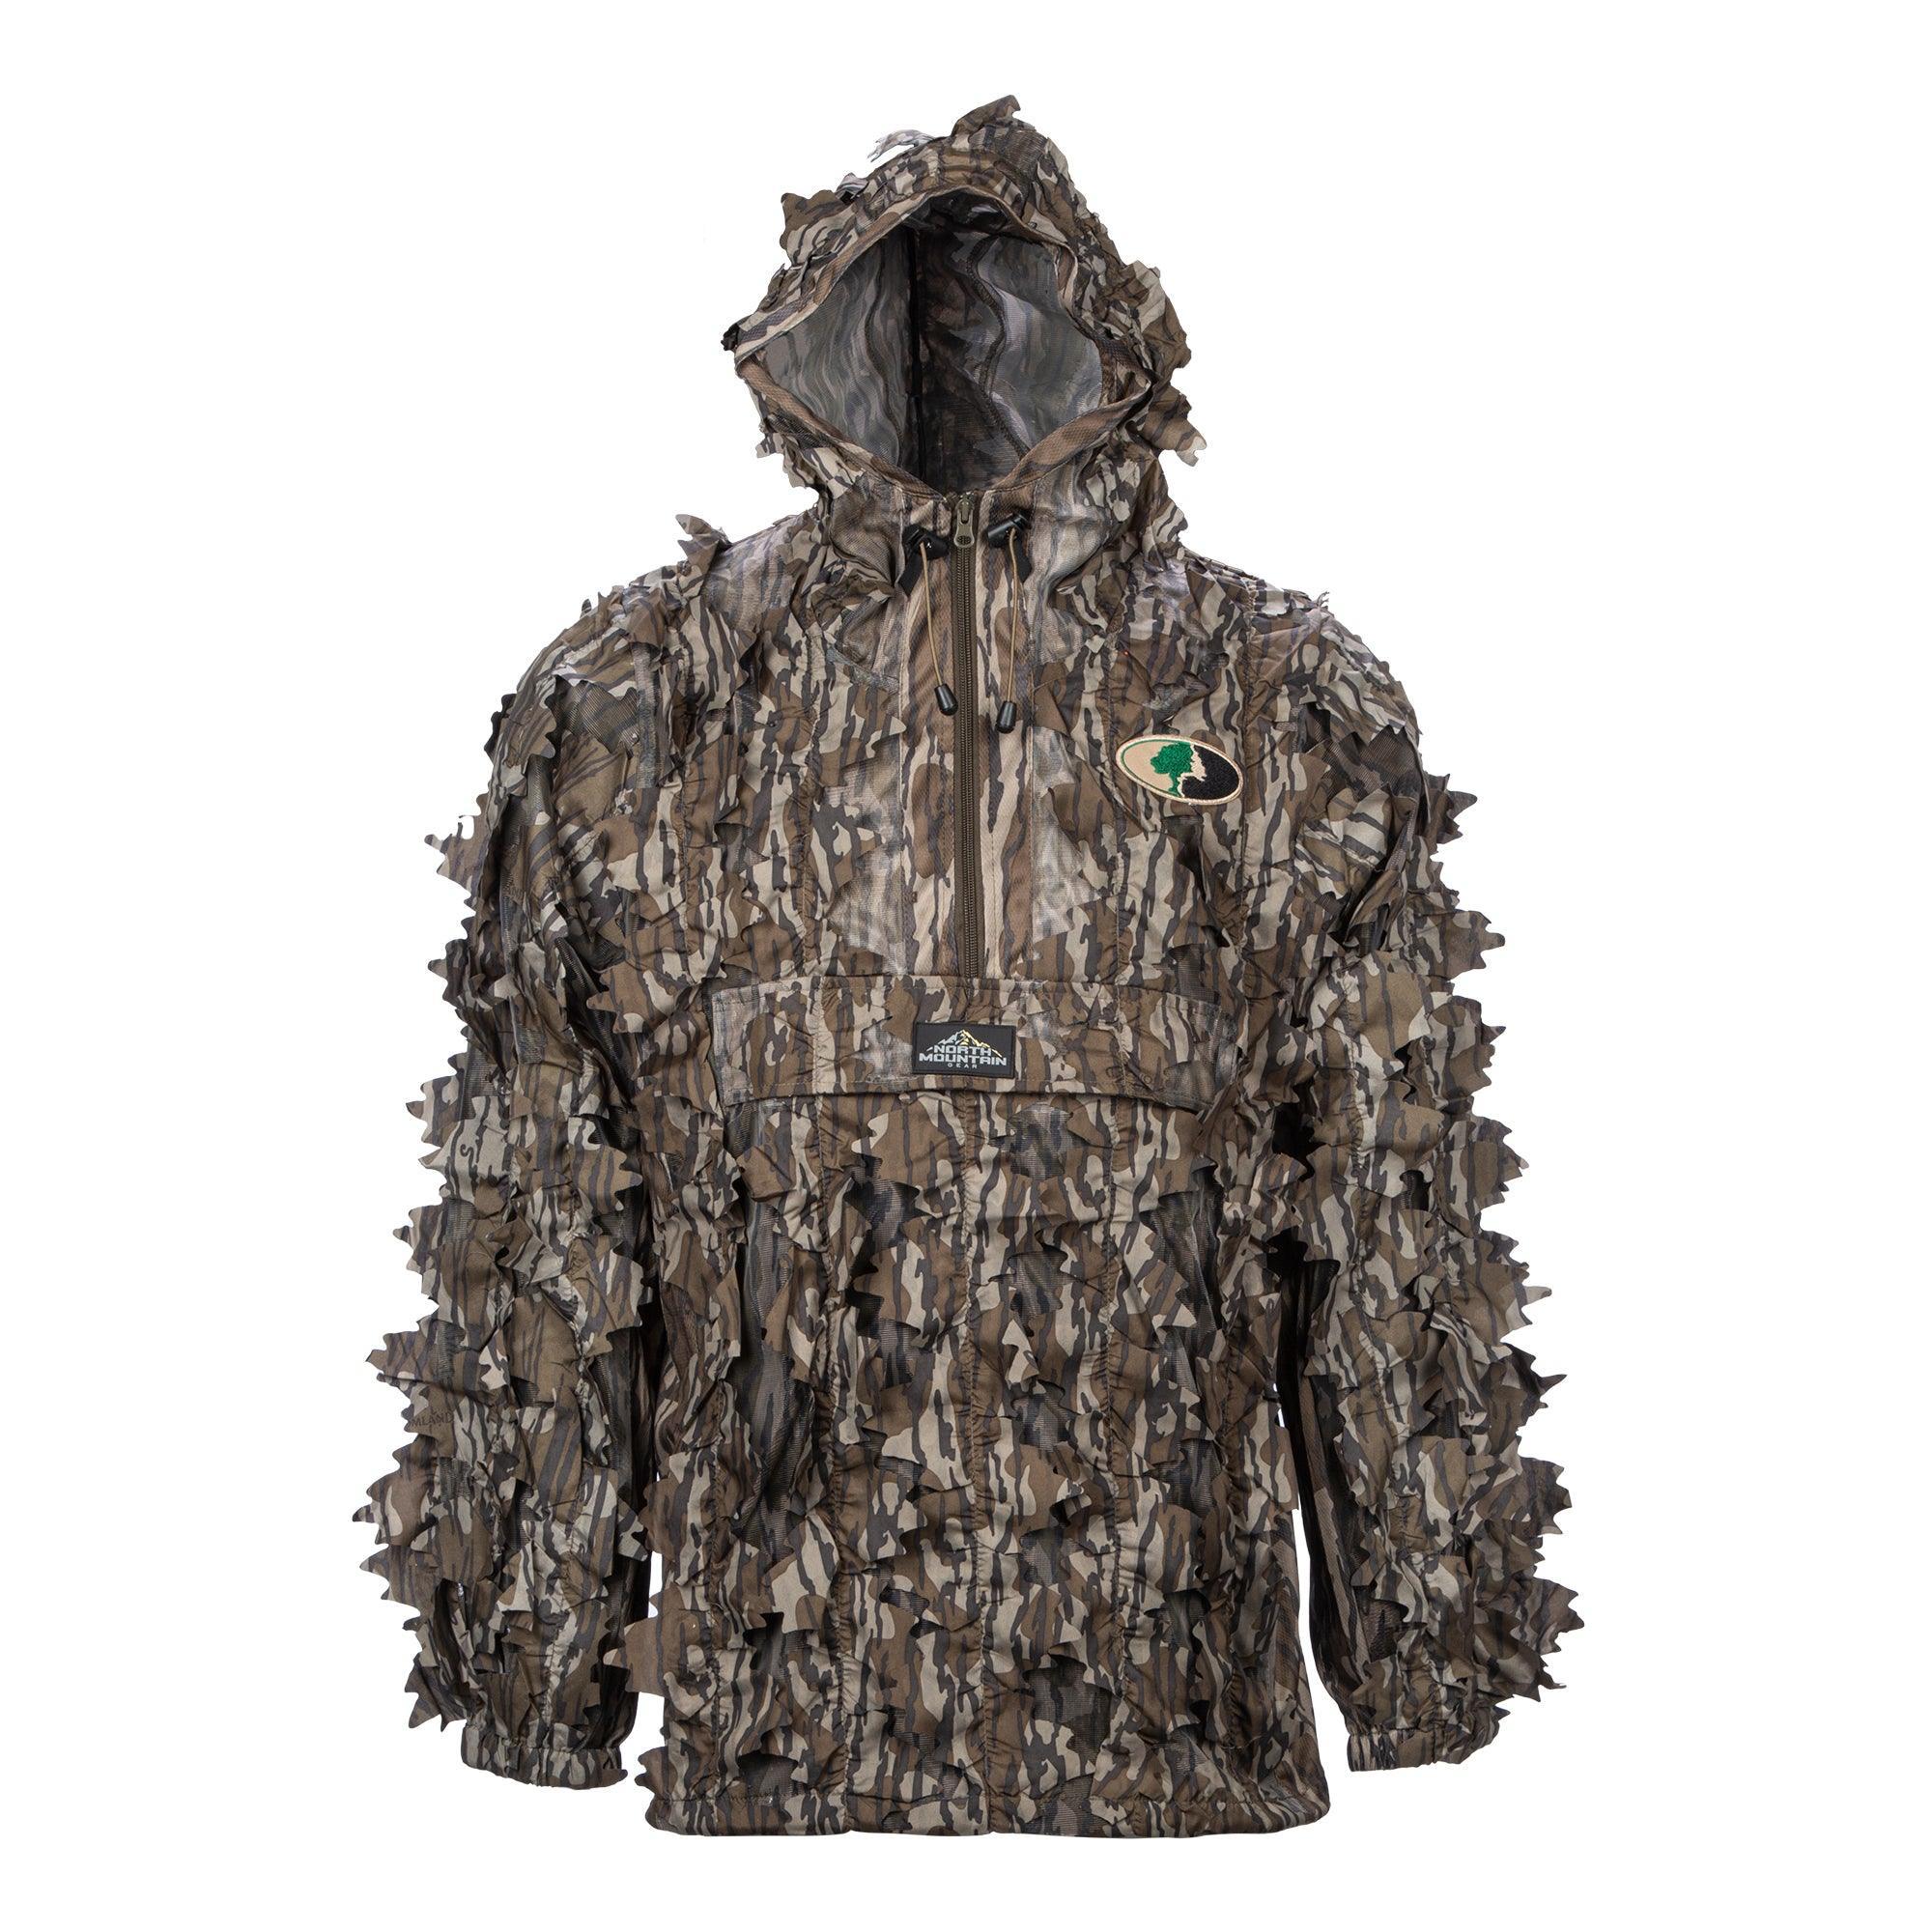 Mossy Oak 3D Leafy Jacket With Hood by North Mountain Gear